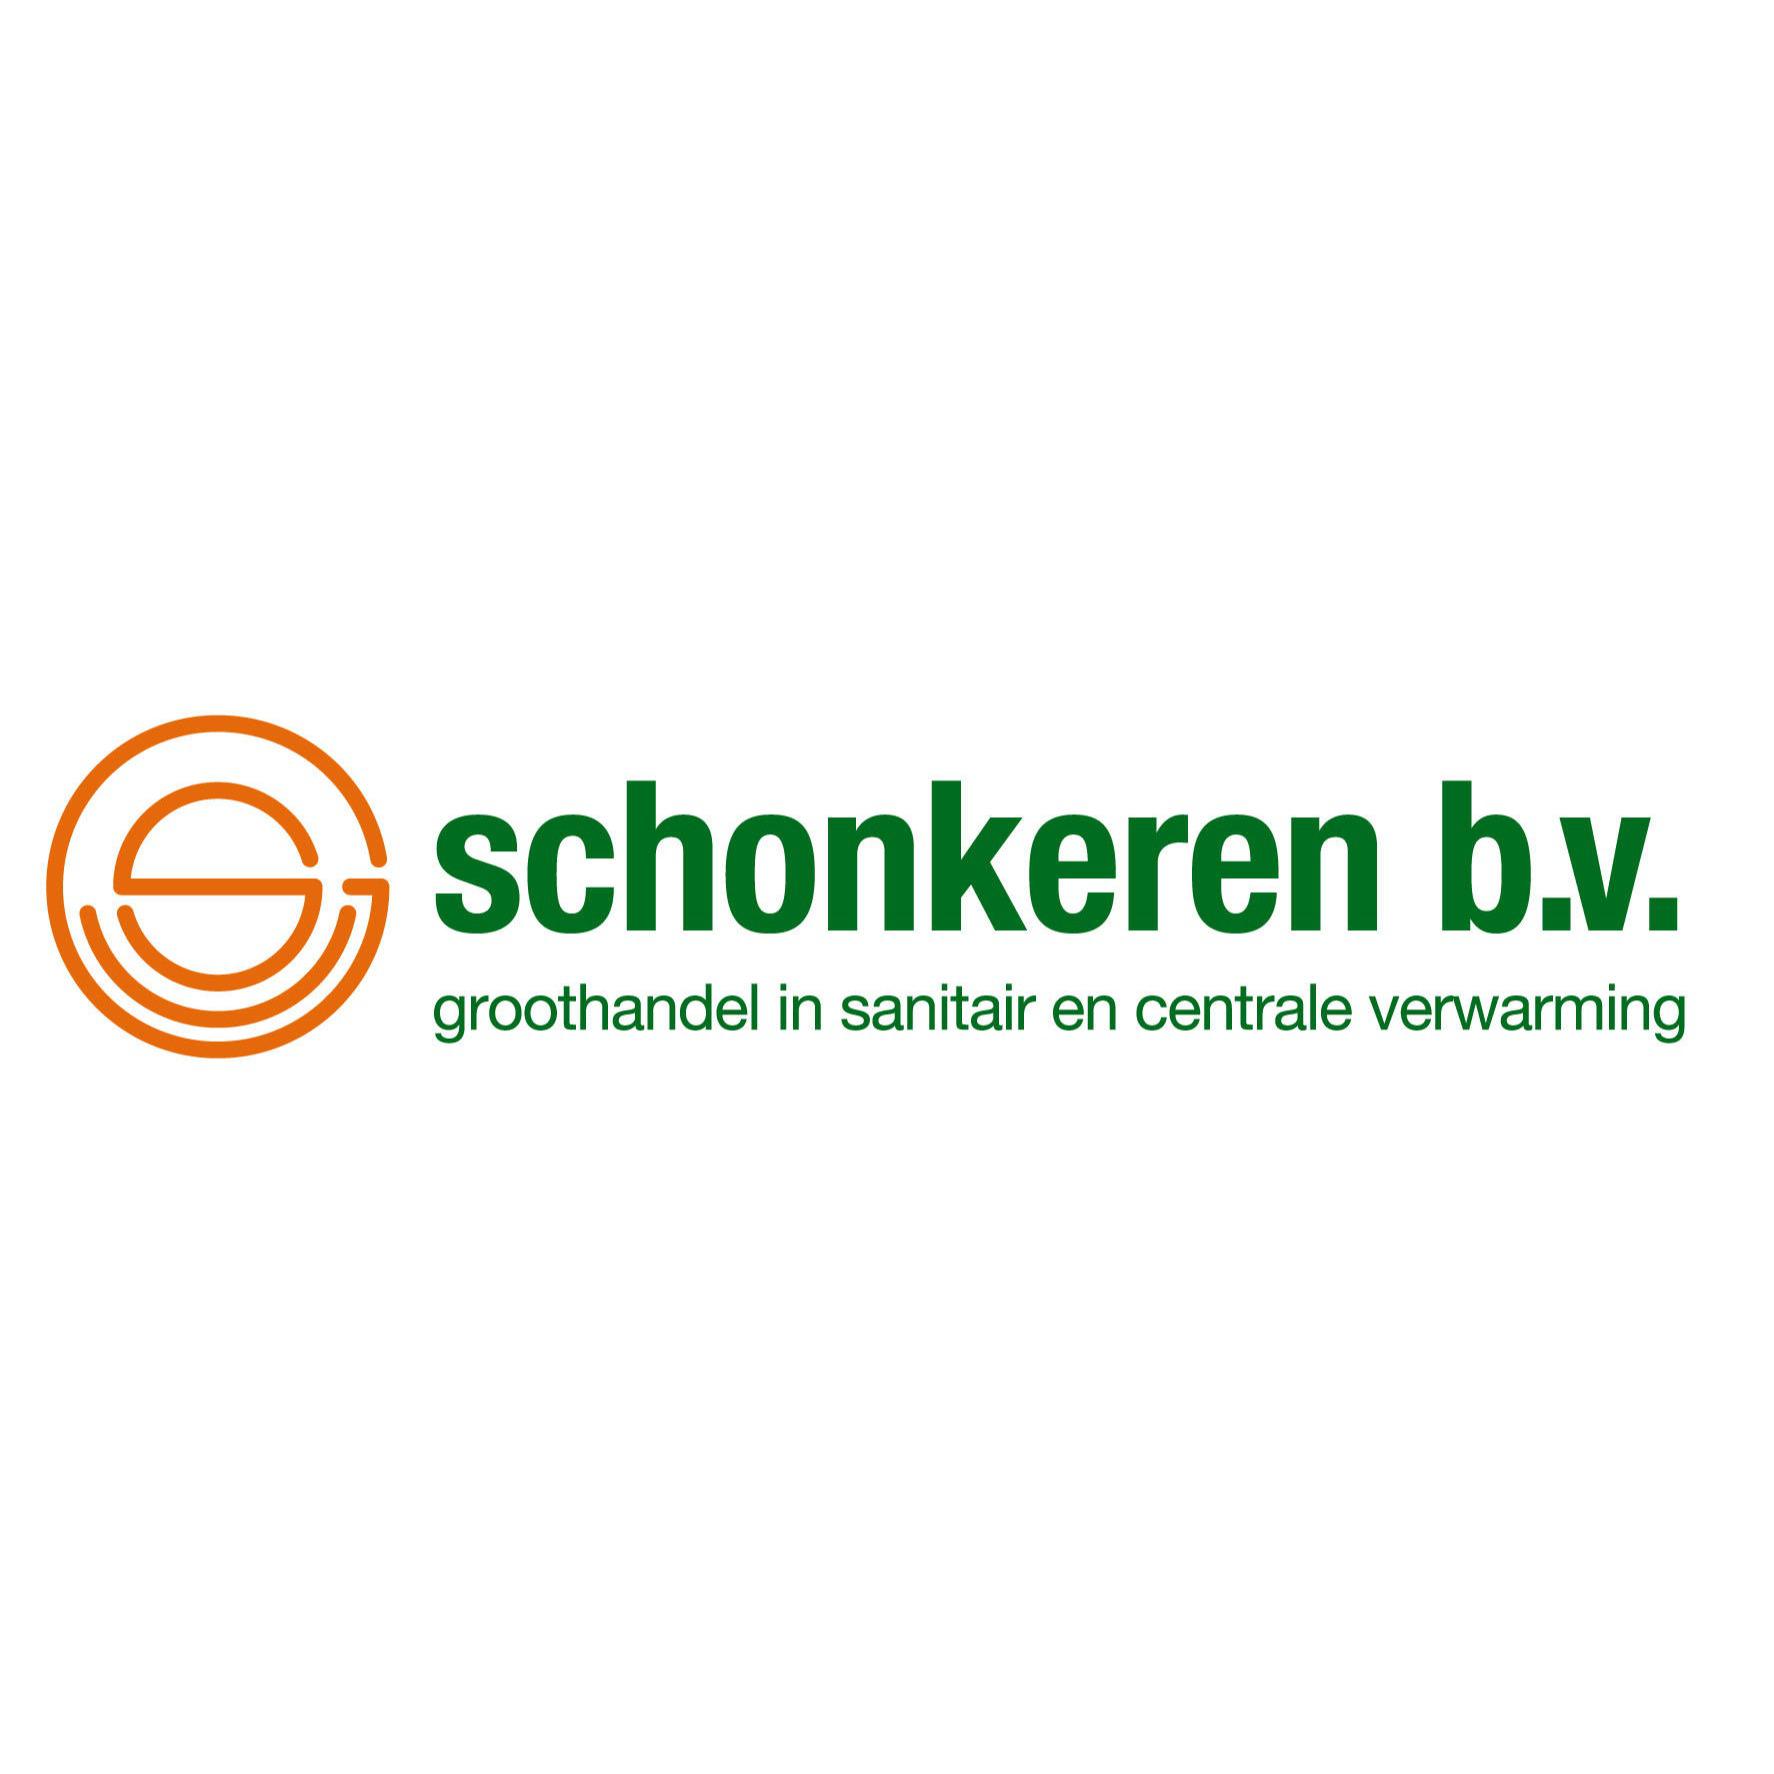 Schonkeren BV Sanitair & Centrale Verwarming - Bathroom Supply Store - Weert - 0495 457 111 Netherlands | ShowMeLocal.com